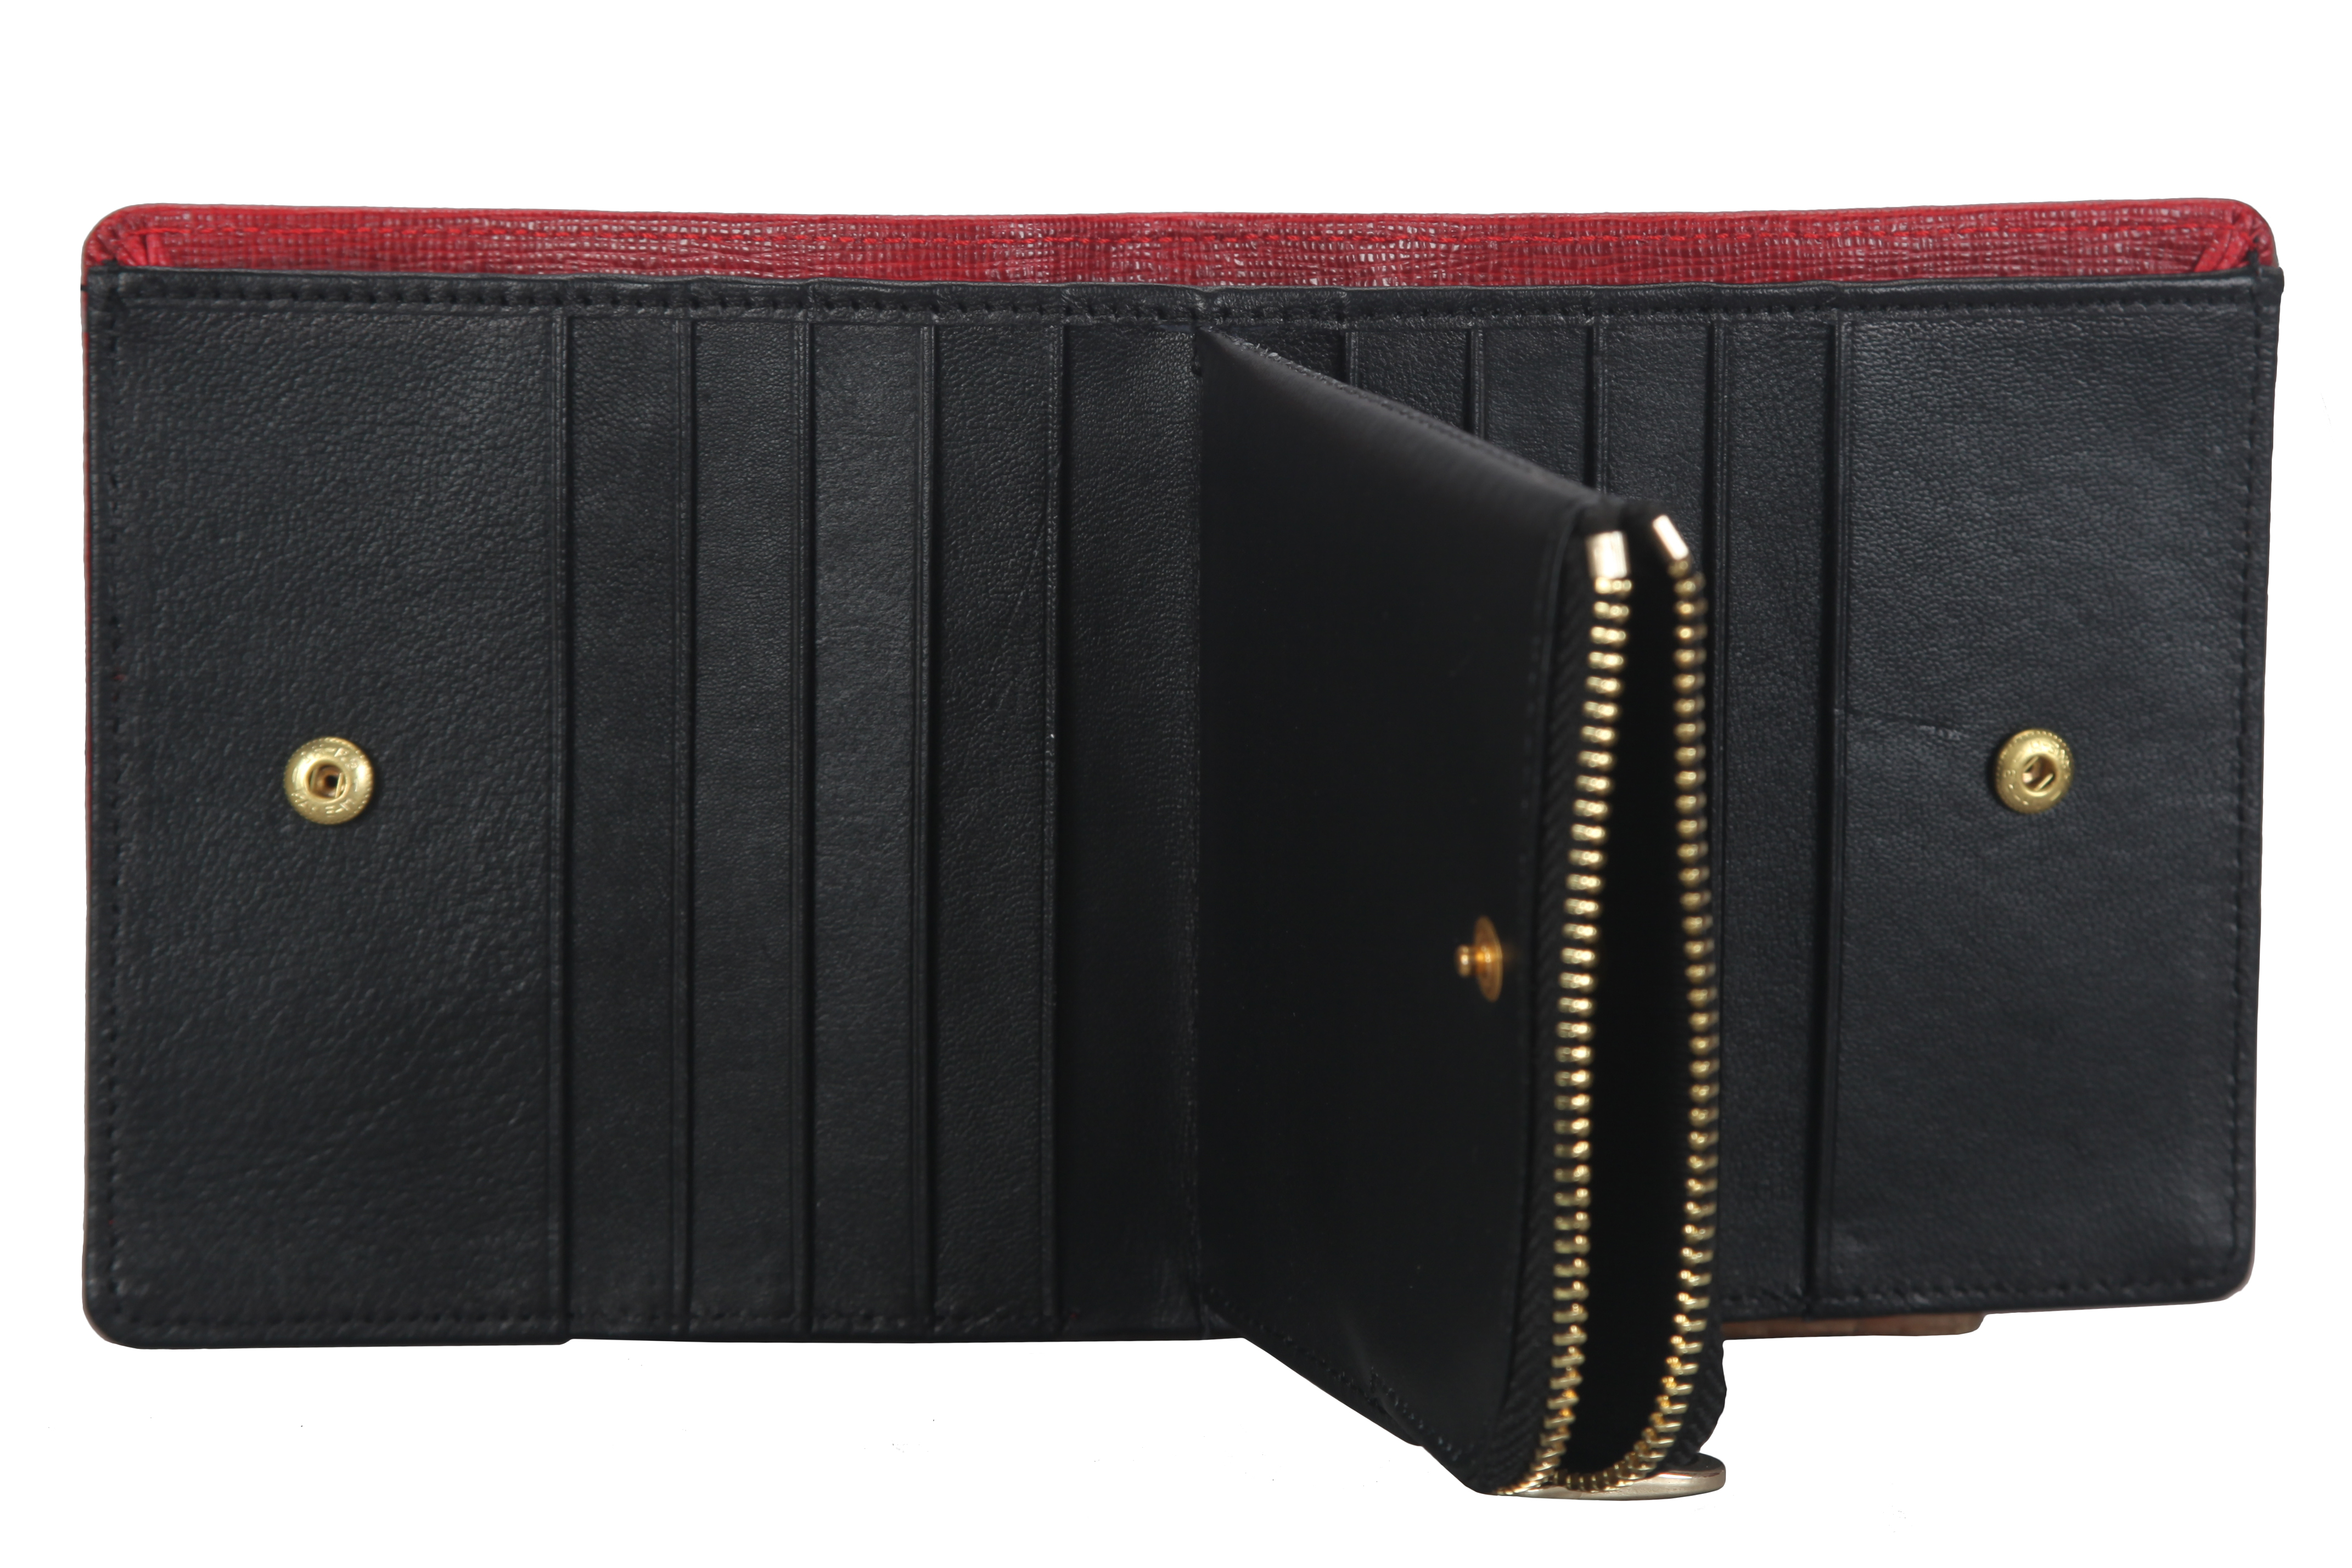 W318-Alabama-Women's bifold wallet in Genuine Leather - Red/Black